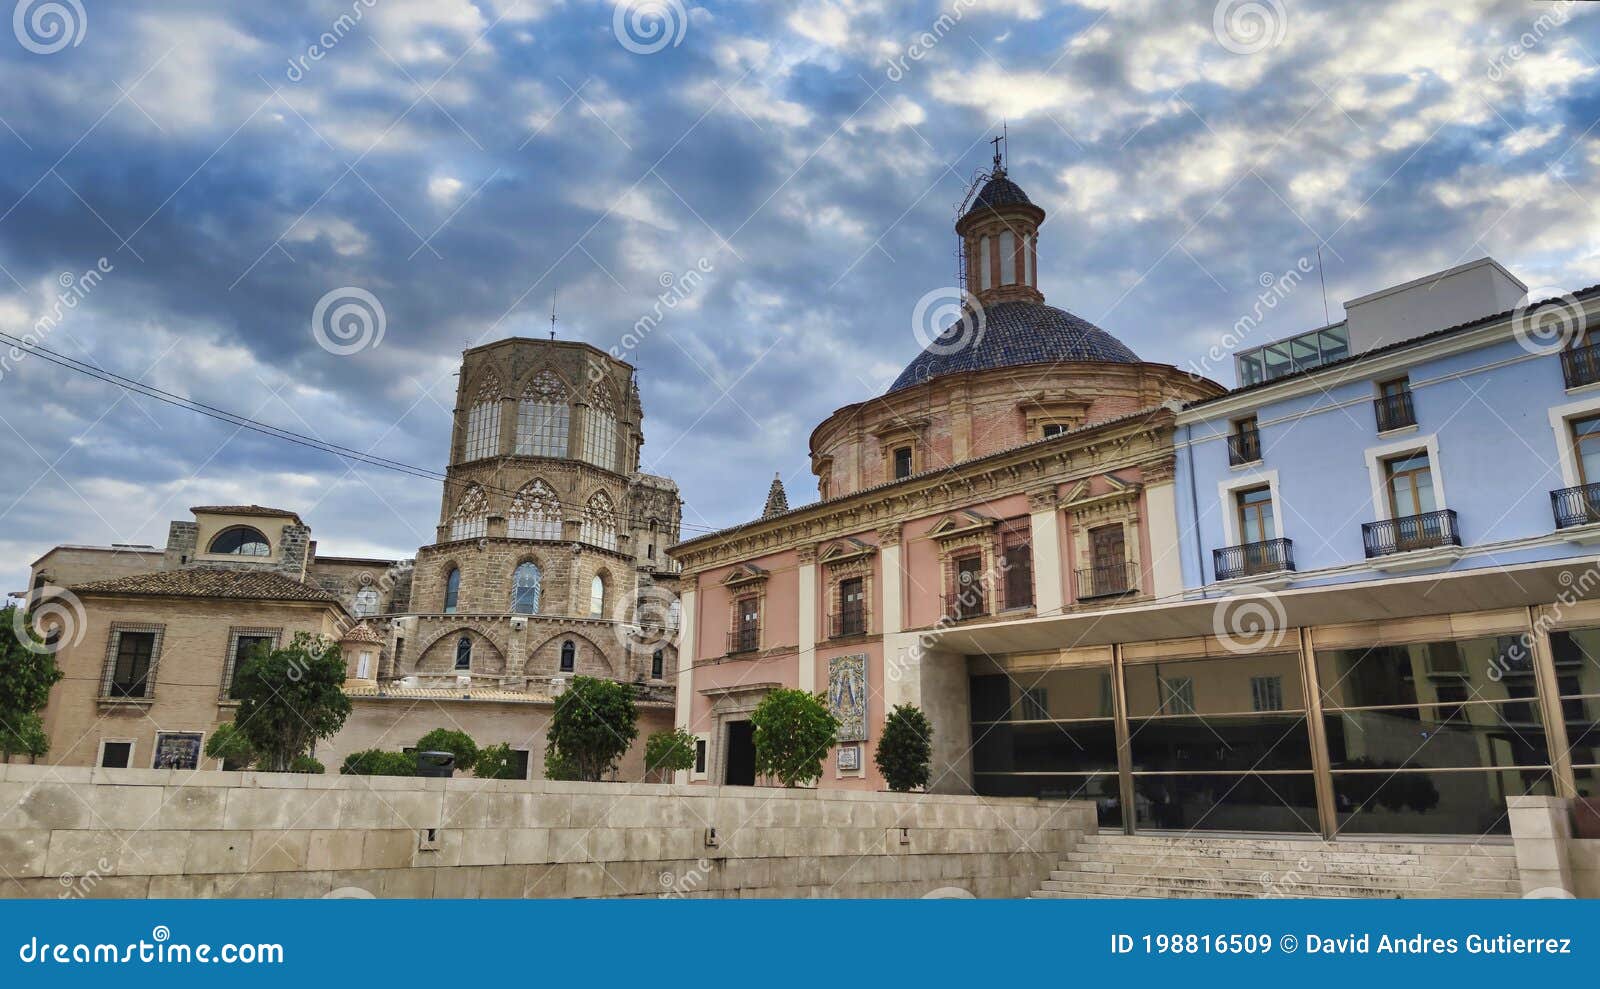 decimo junio Ã¢â¬â¹Ã¢â¬â¹bruto square in valencia with the dome of the royal basilica of our lady of the forsaken